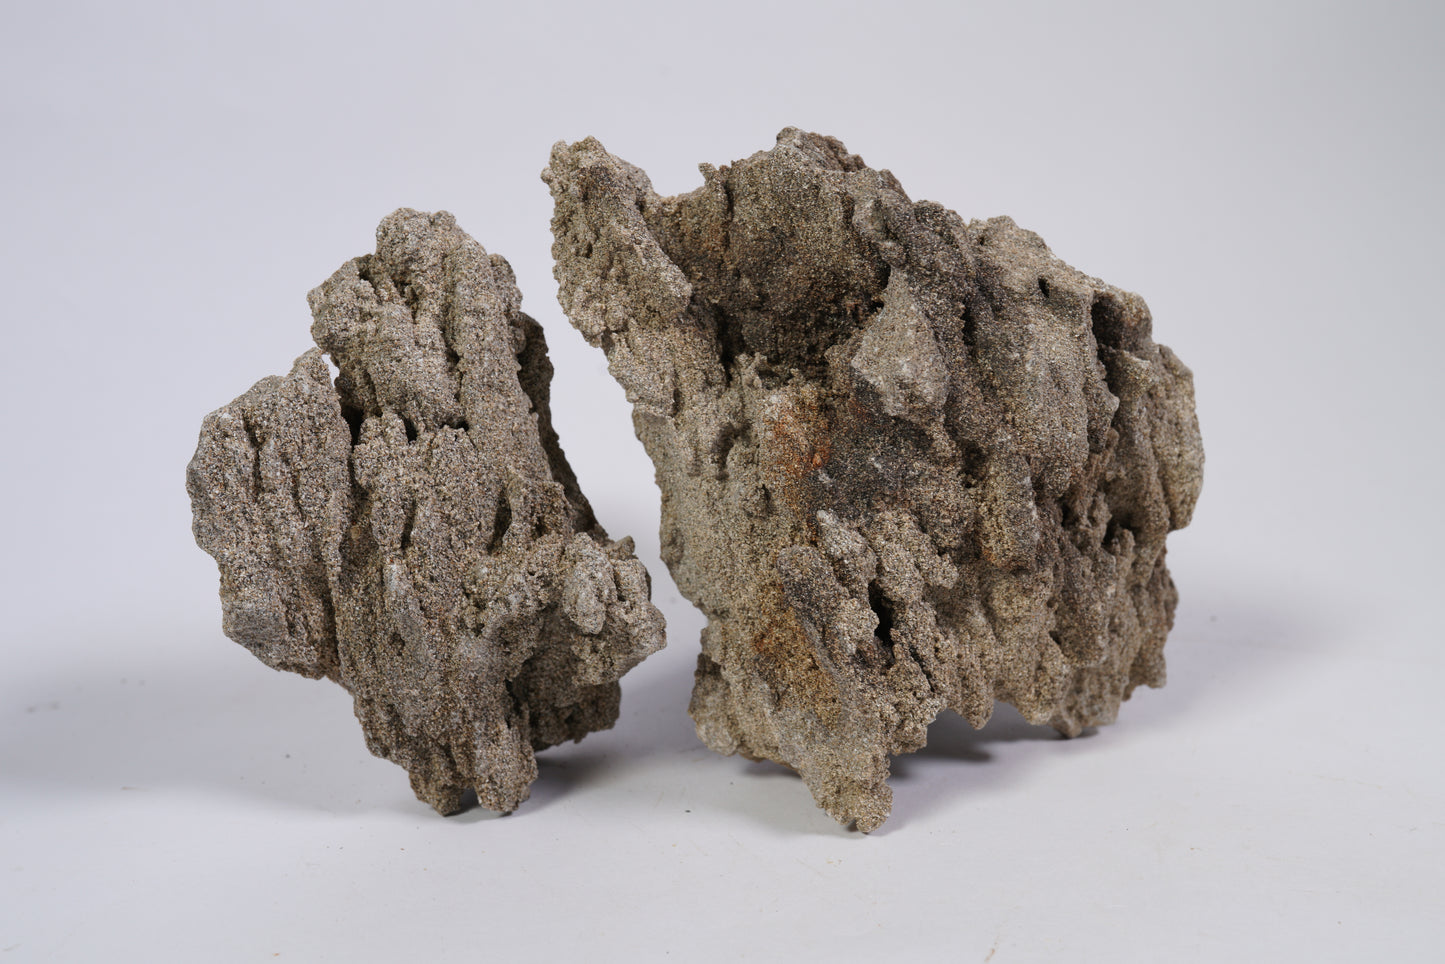 LANDEN Mountain Stone Natural Rocks for Aquarium (18lbs,3-9 inches)10-11pcs